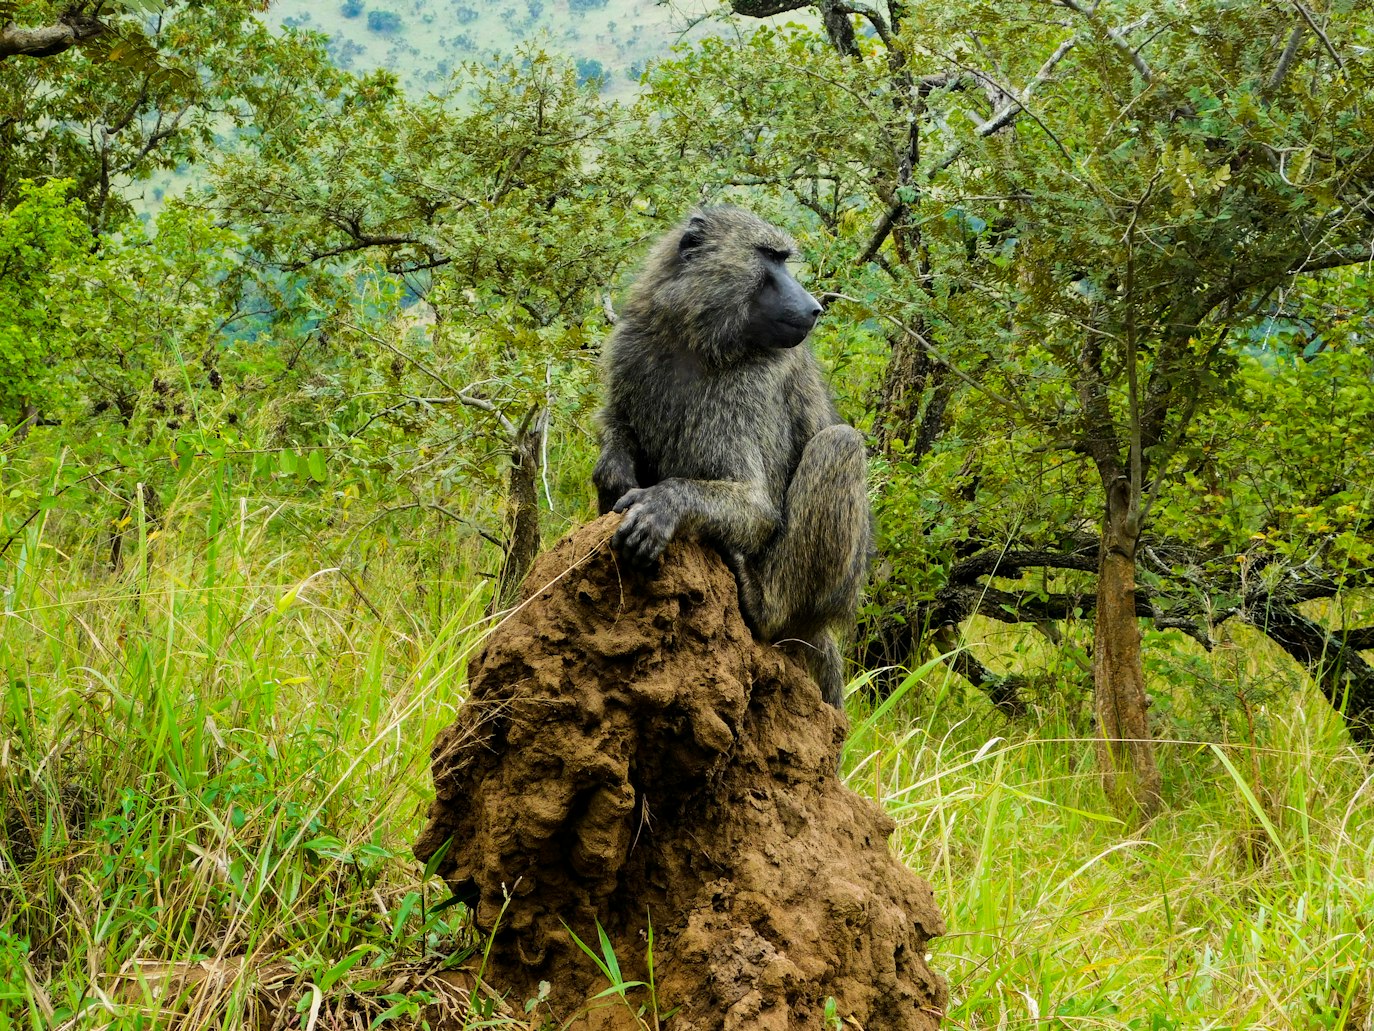 safari excursion to Rwanda from Italy